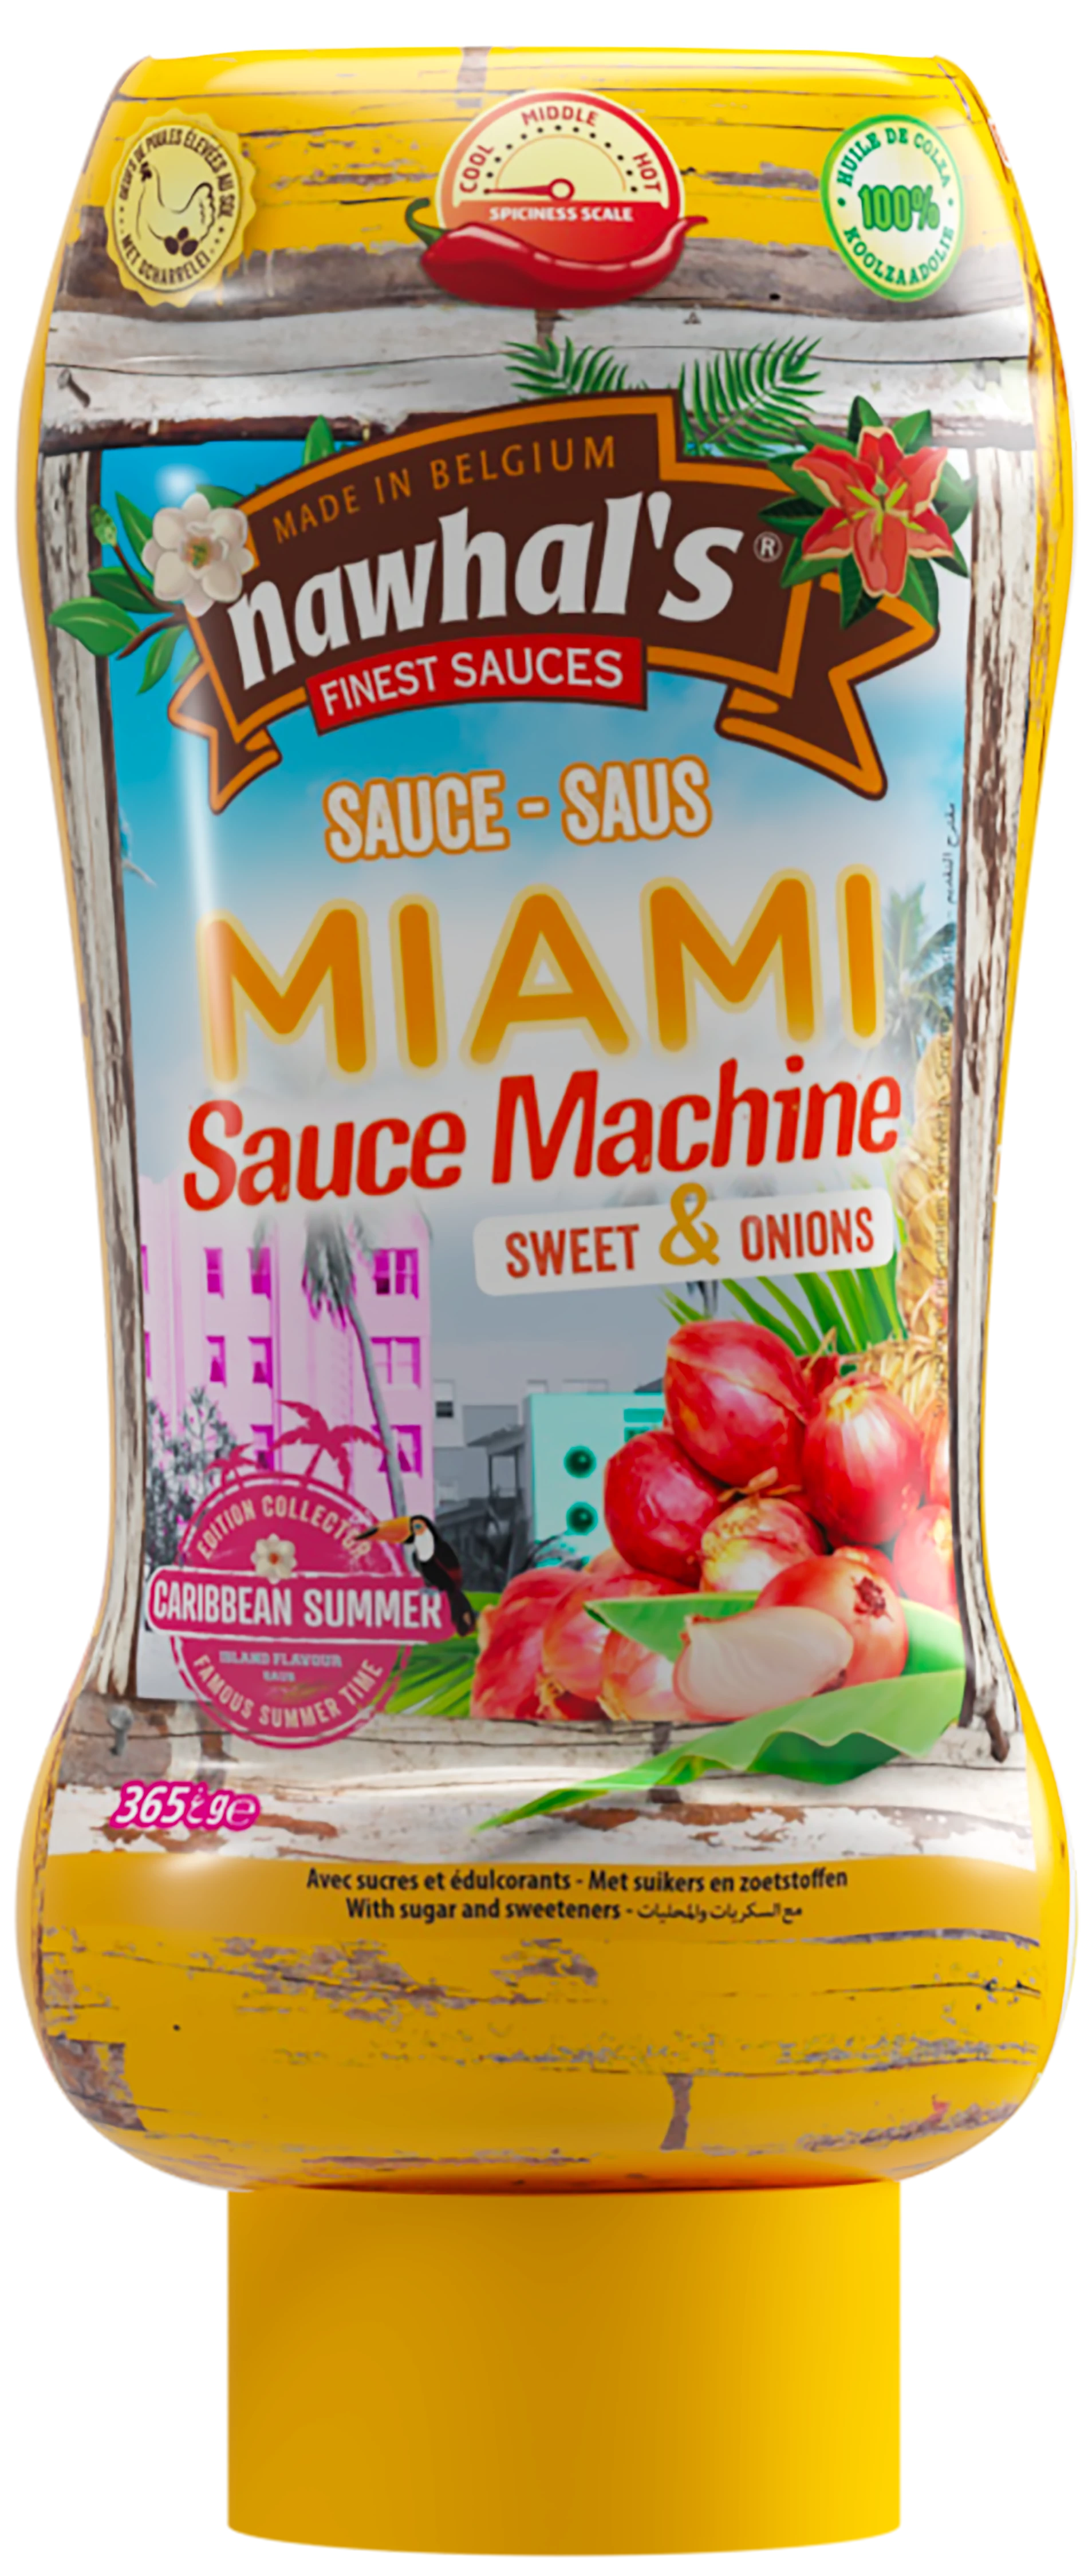 Miami-Sauce 365gr / 350ml - NAWHAL'S